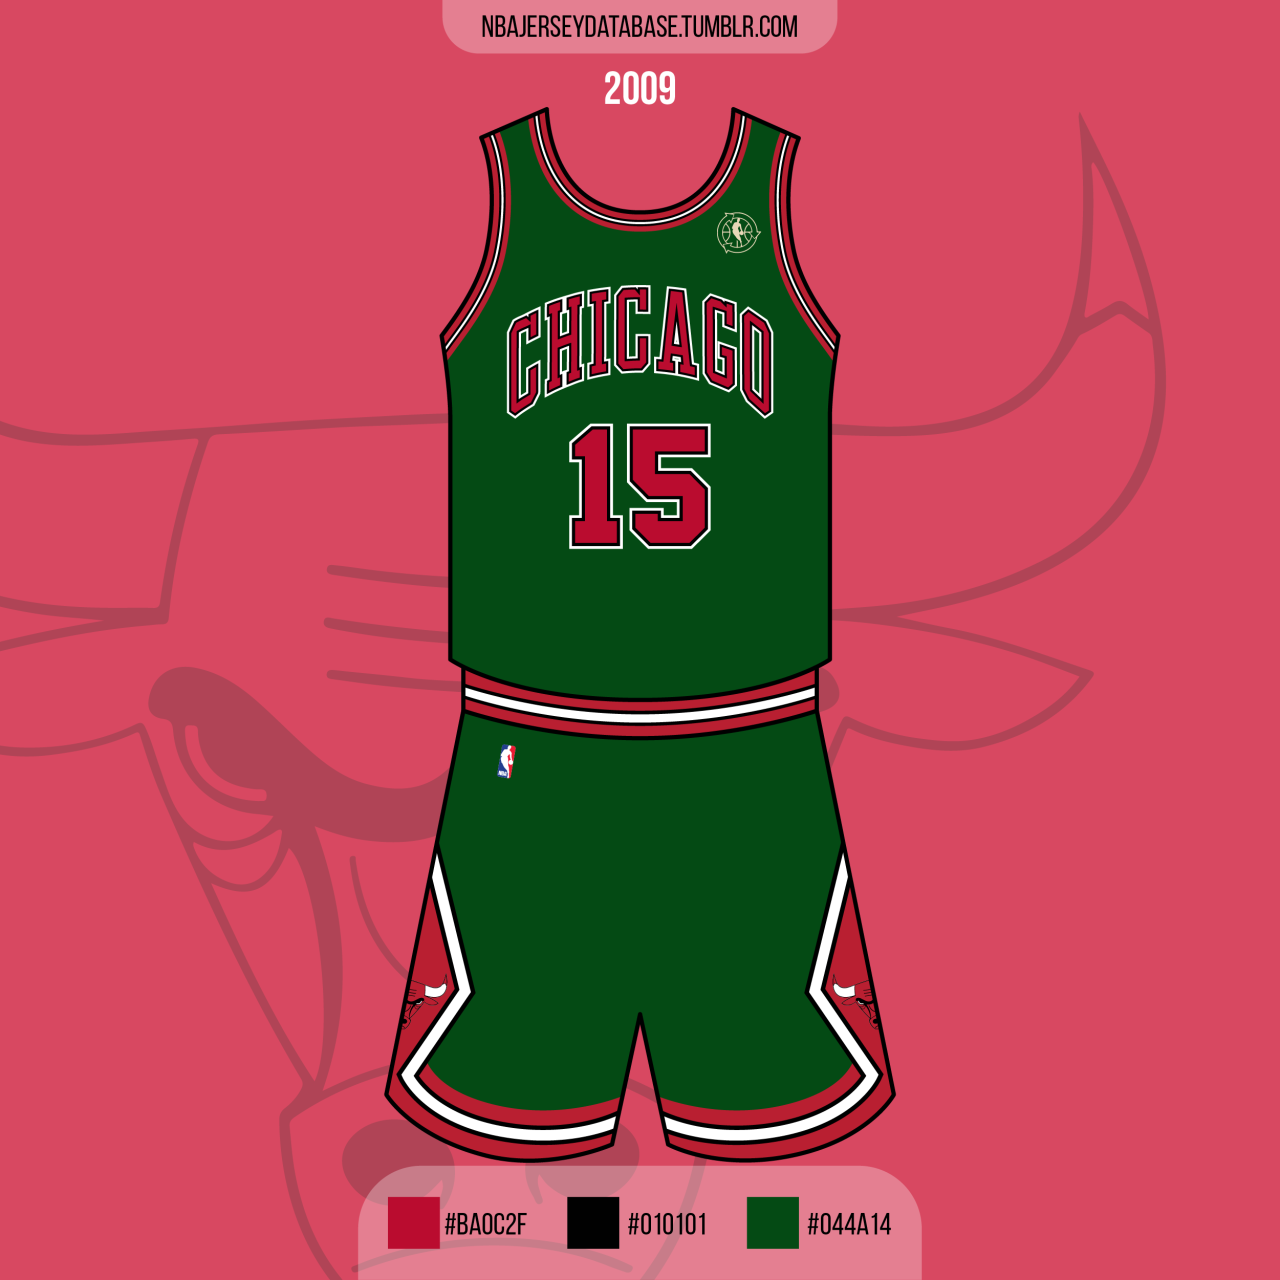 Bulls 'go green' for NBA's Green Week